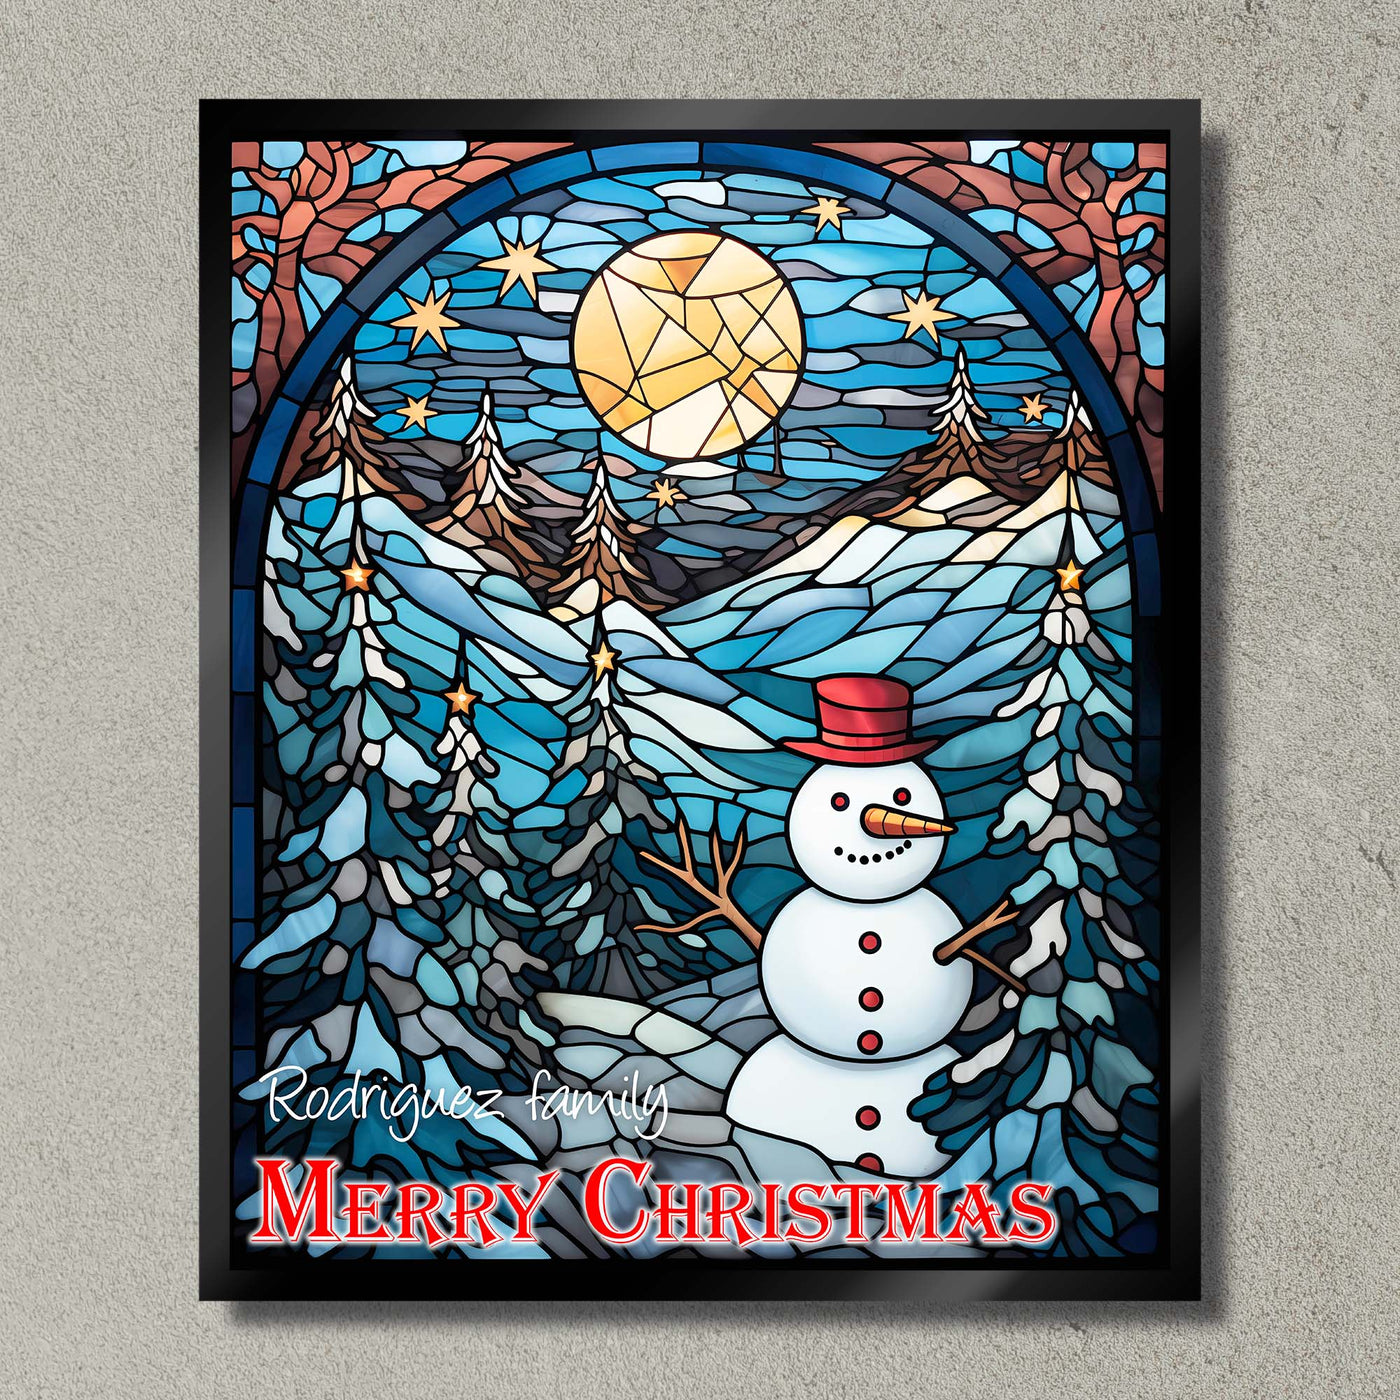 Illumingtated artwork of a snowman Christmas scene